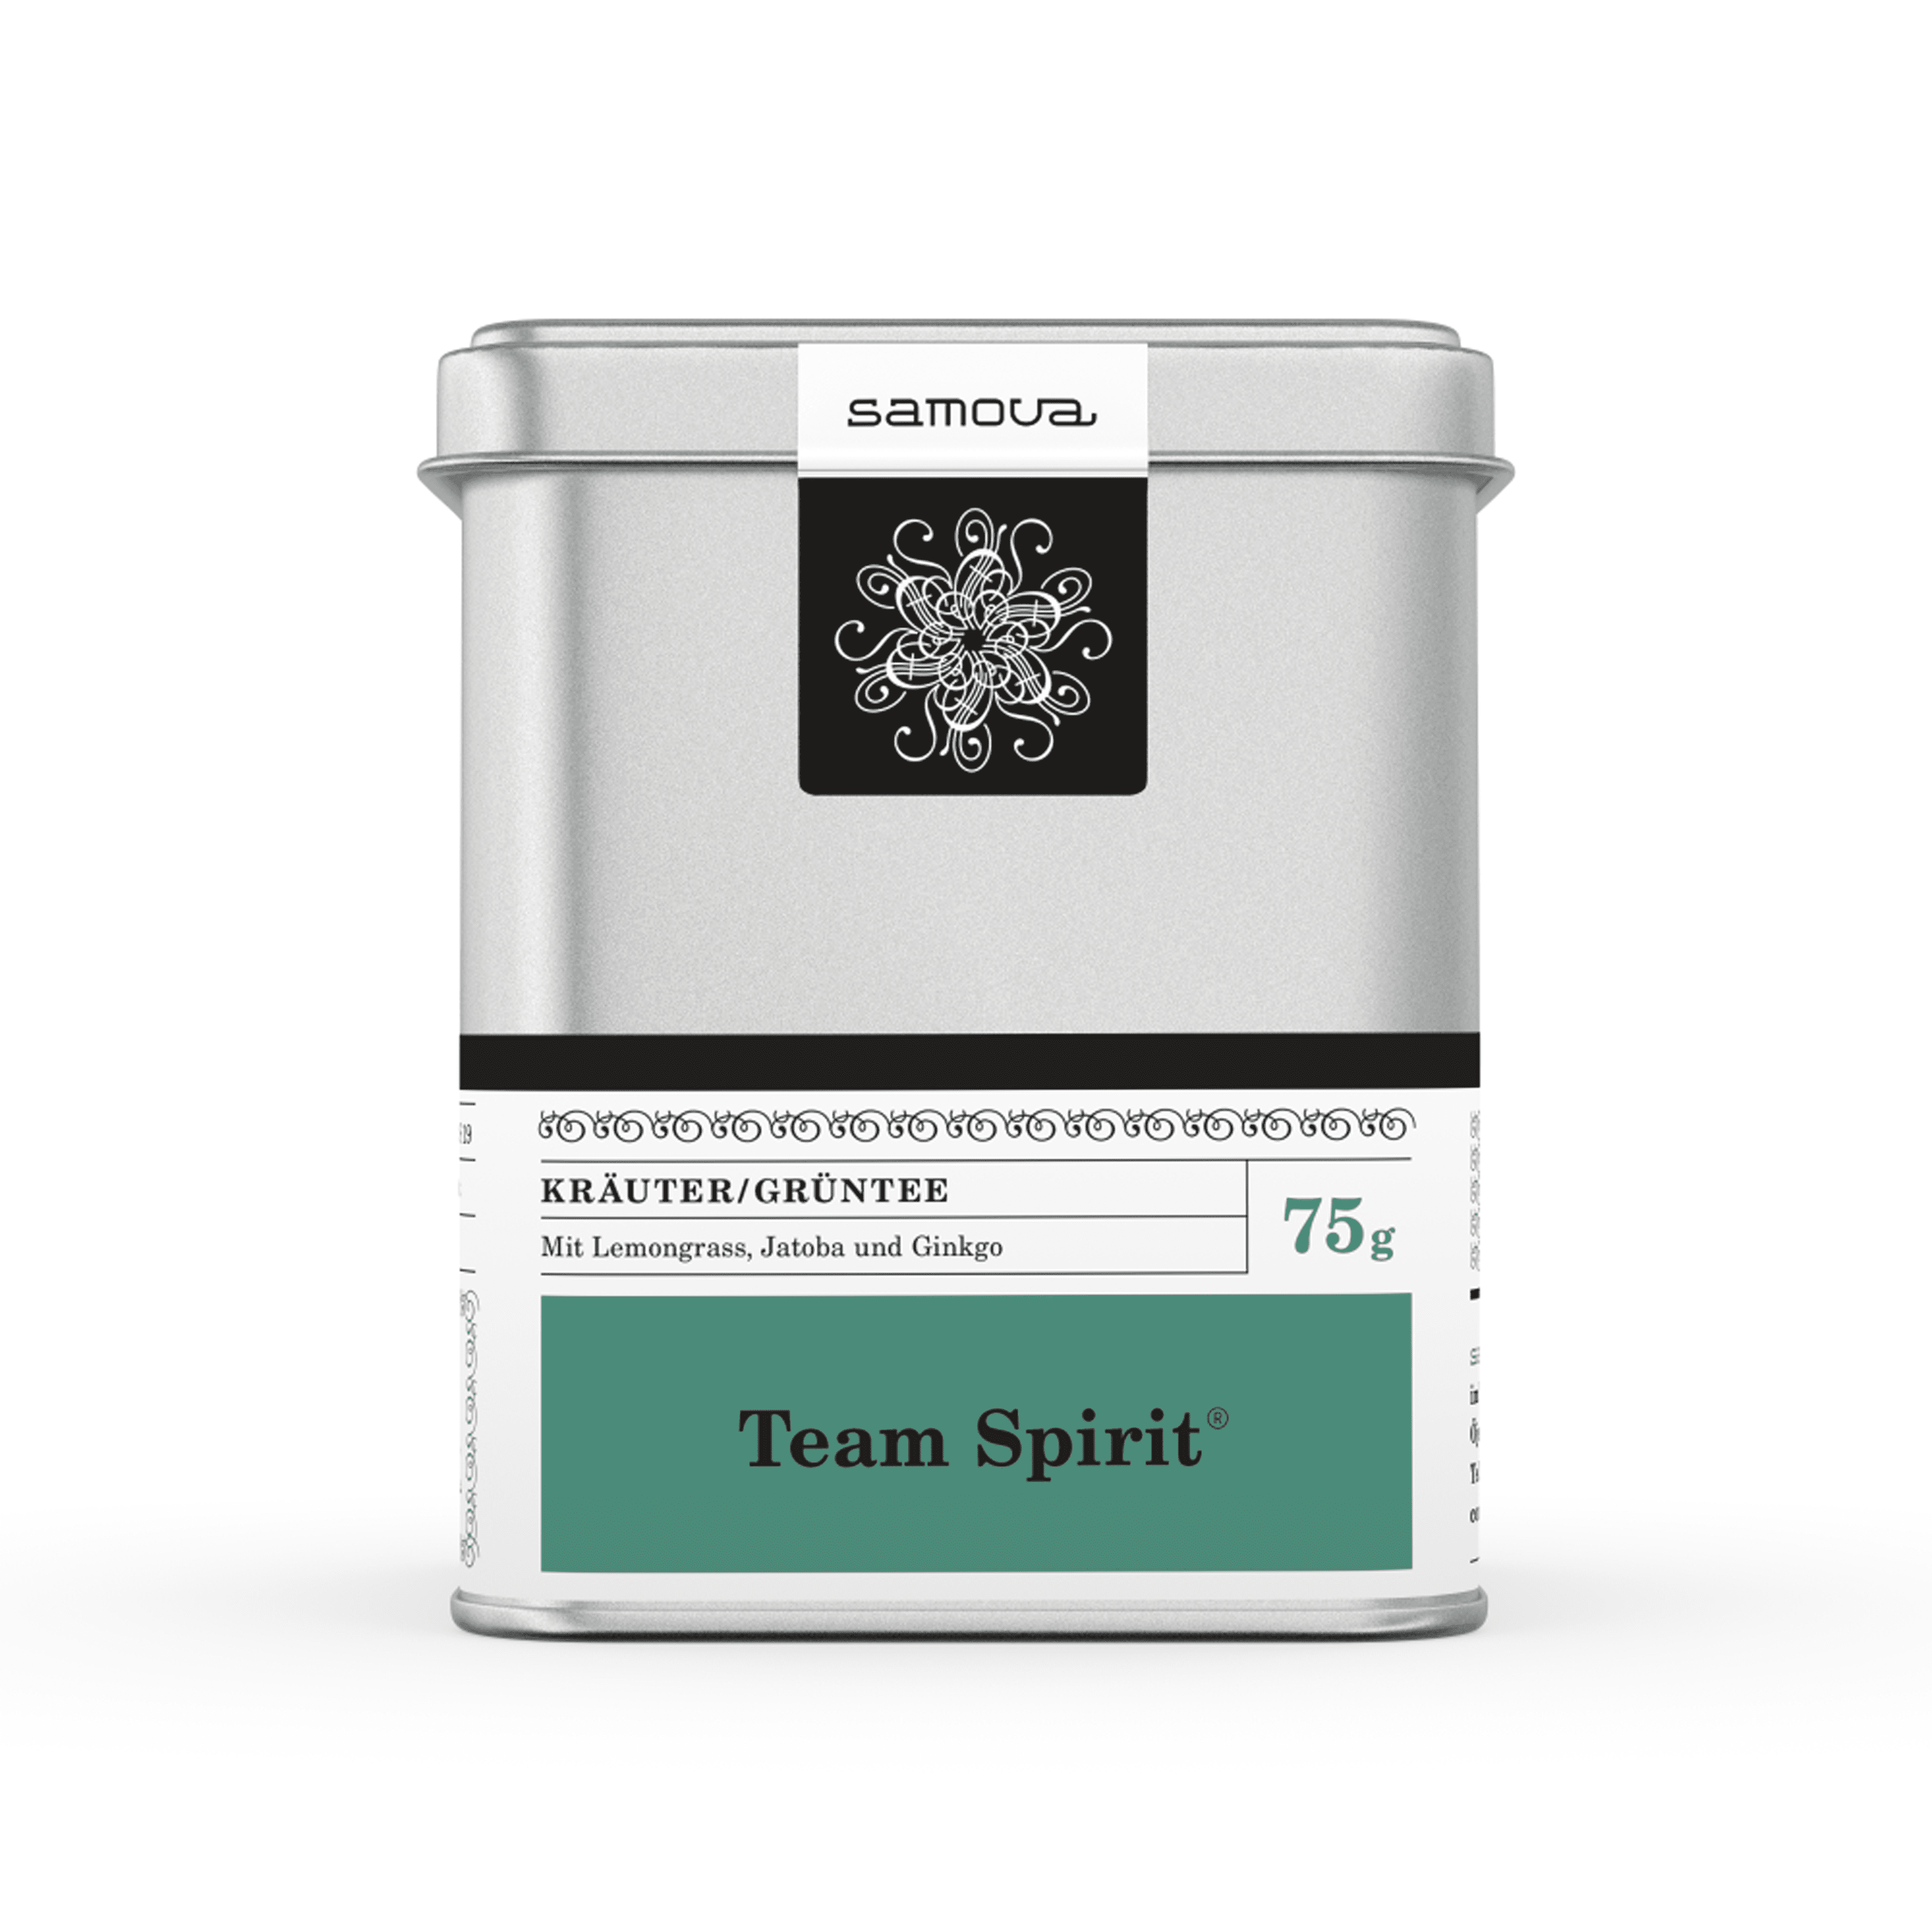 Can of Team Spirit tea